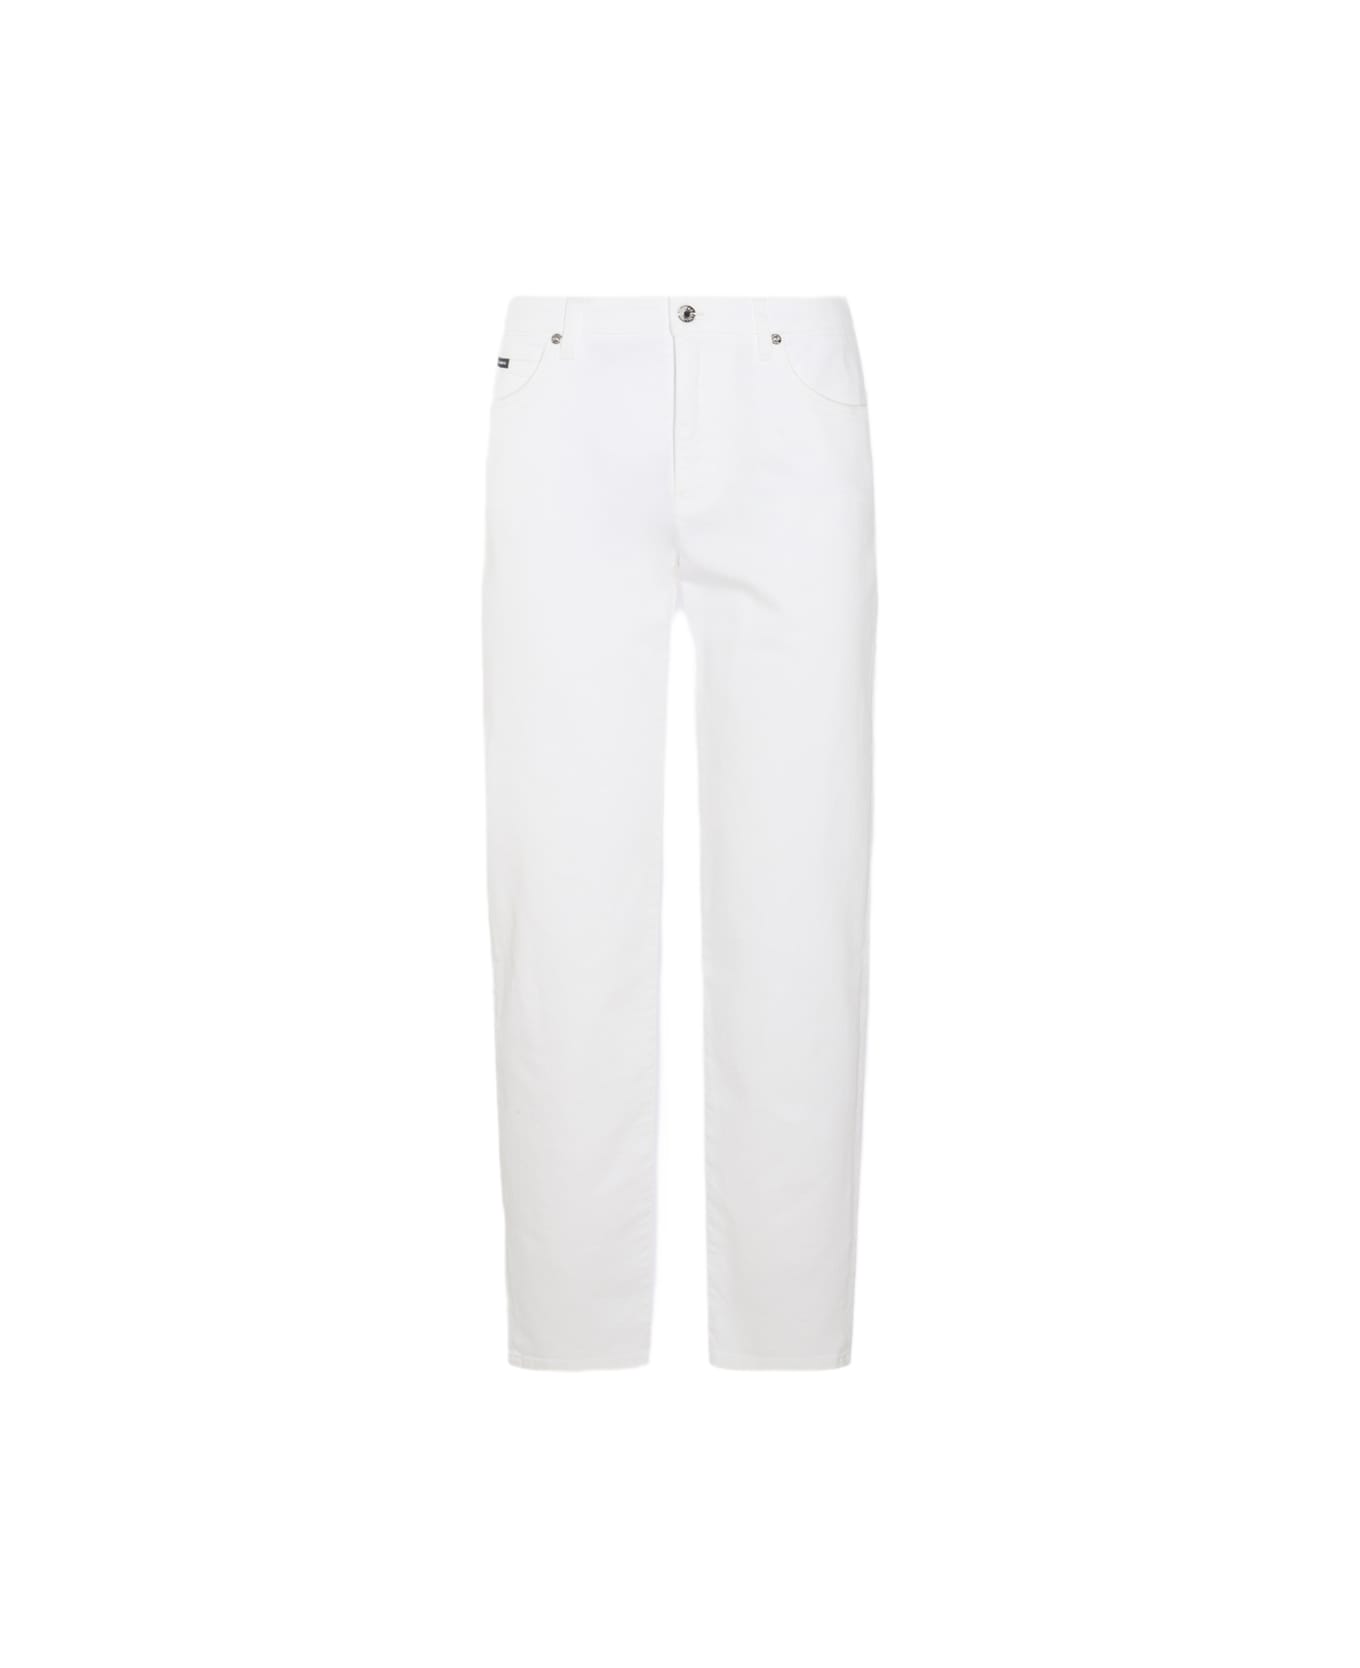 Dolce & Gabbana White Cotton Blend Jeans - White ボトムス